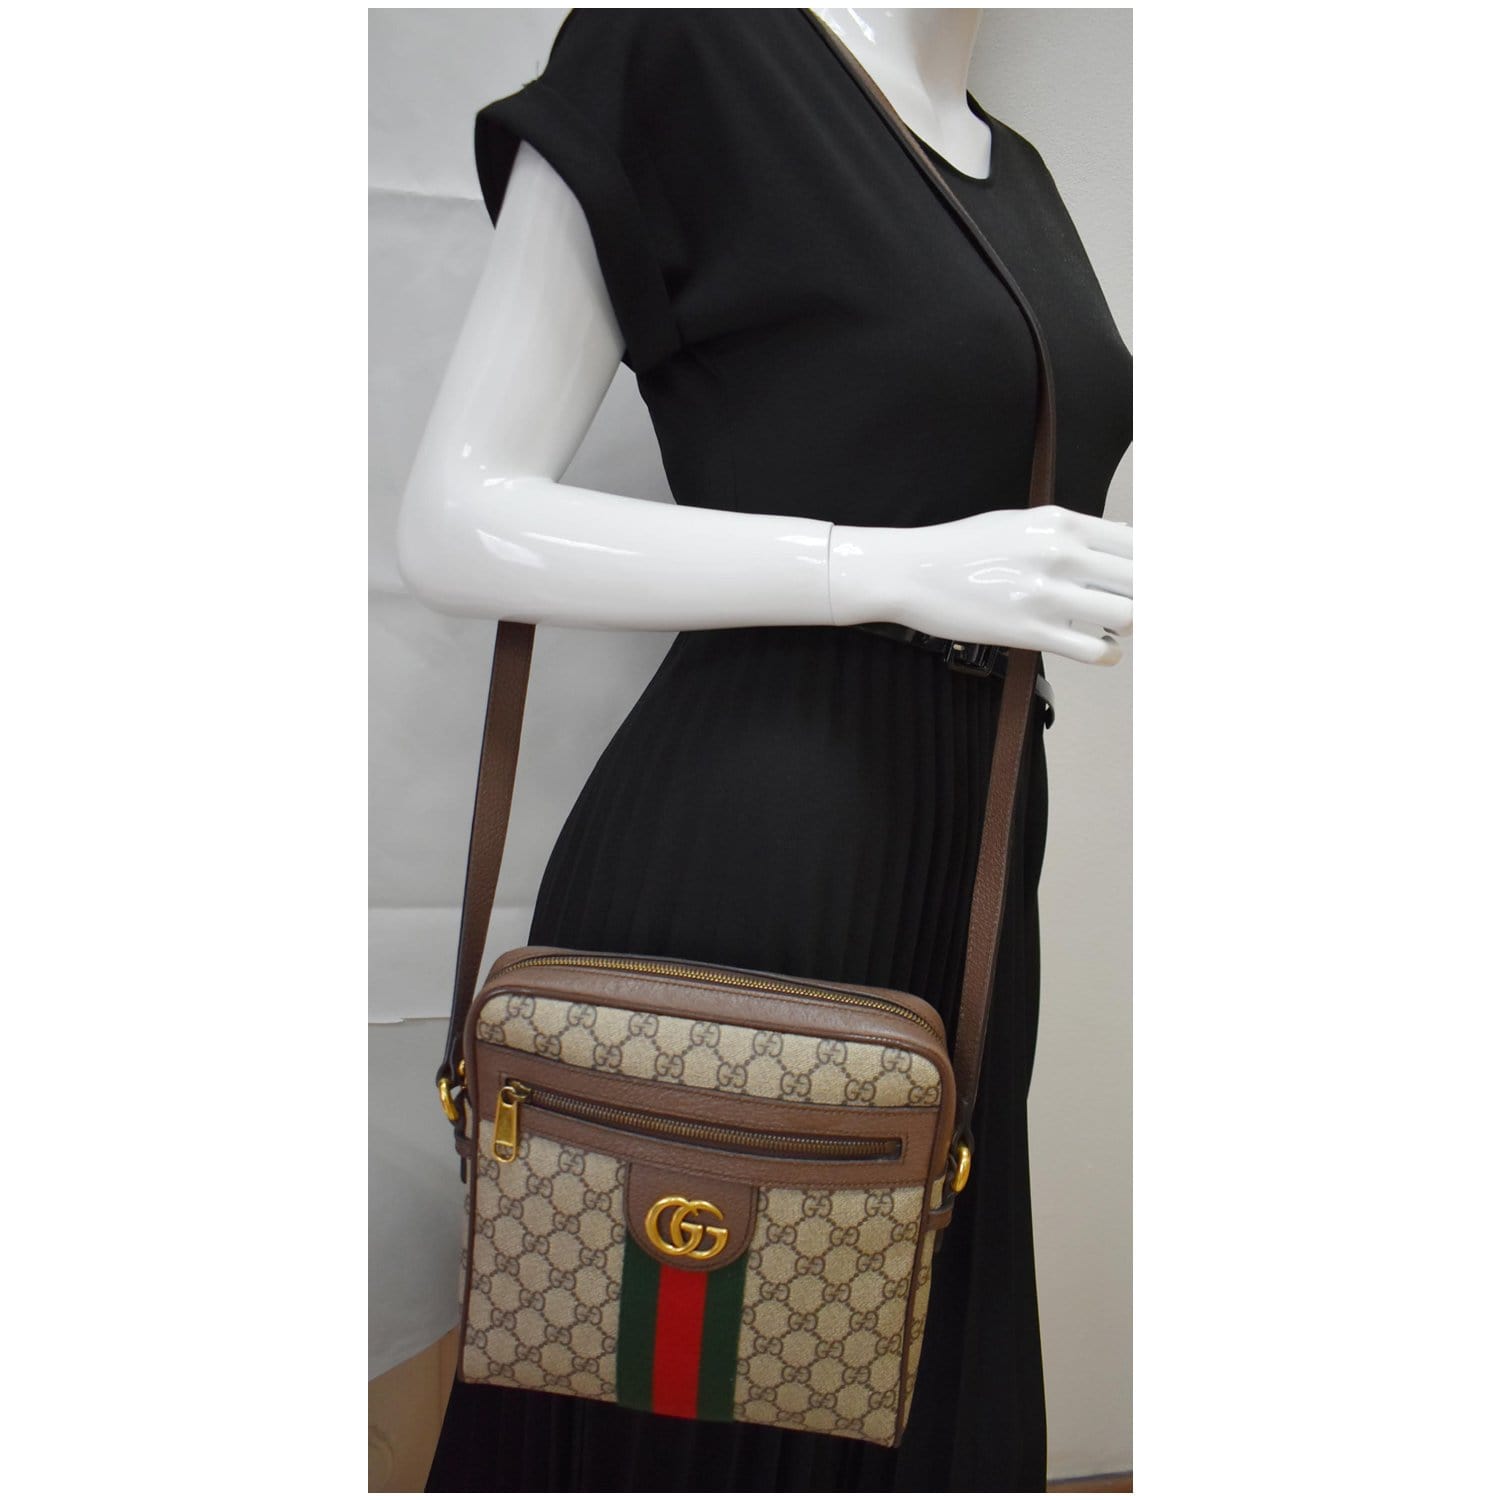 Gucci Ophidia GG Small Messenger Bag Beige/Ebony in Supreme Canvas